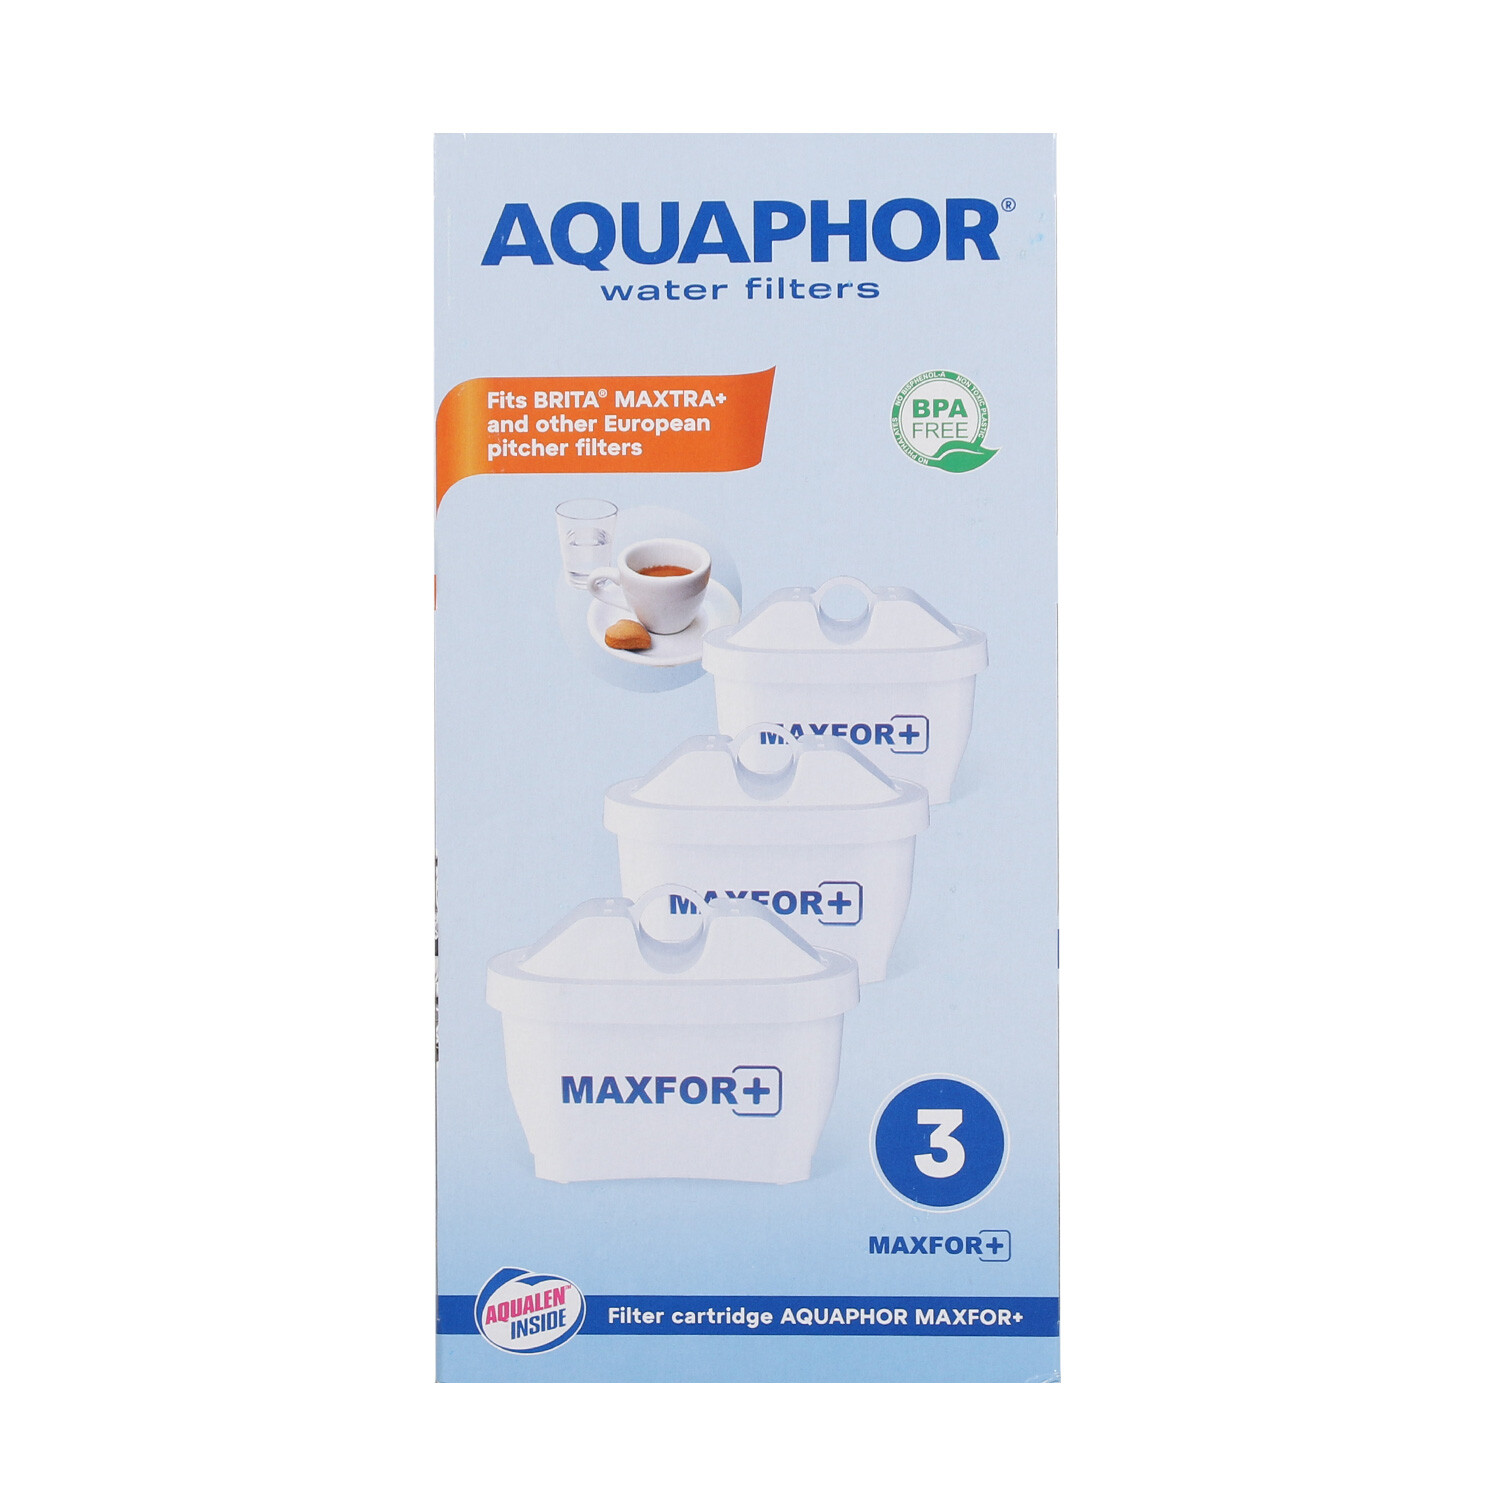 Aquaphor Maxfor Water Filter Cartridge 3 Pack Image